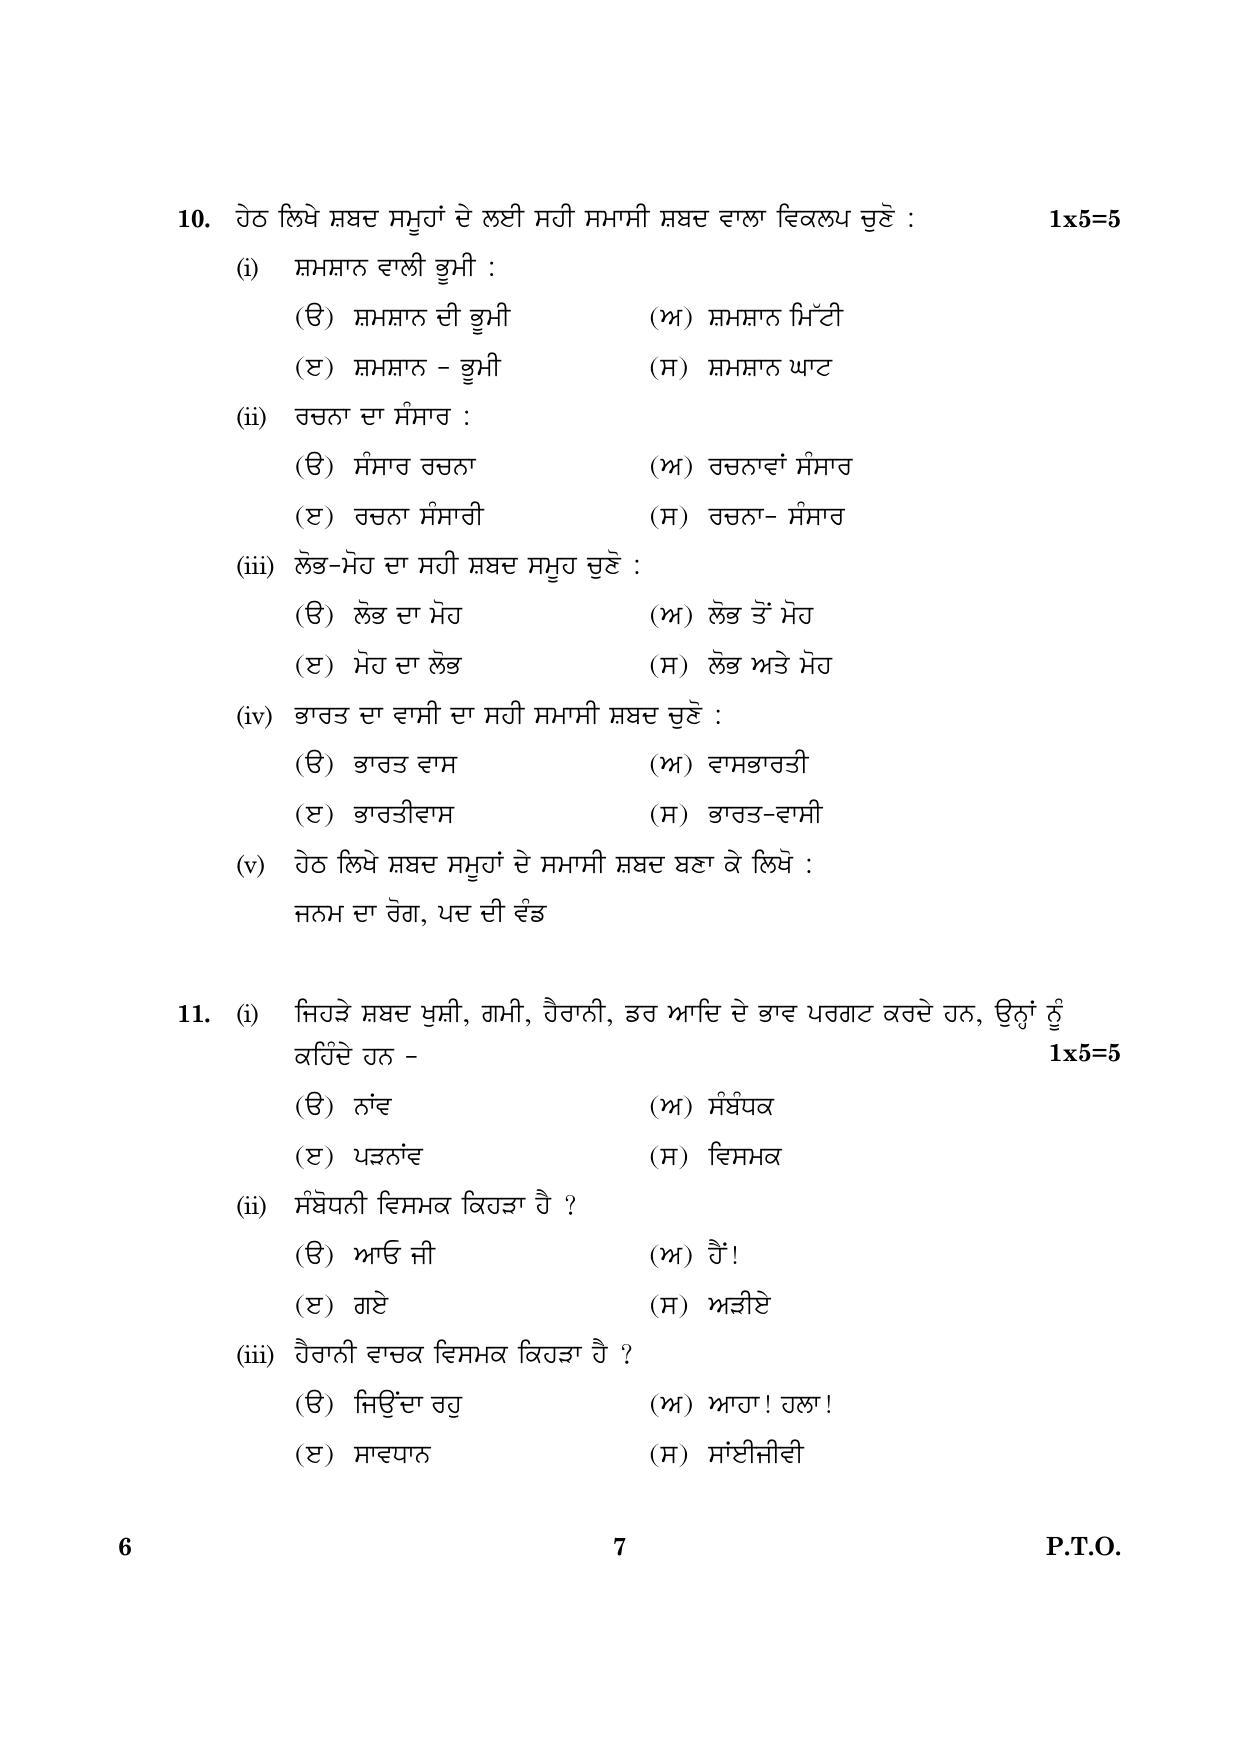 CBSE Class 10 006 Punjabi 2016 Question Paper - Page 7